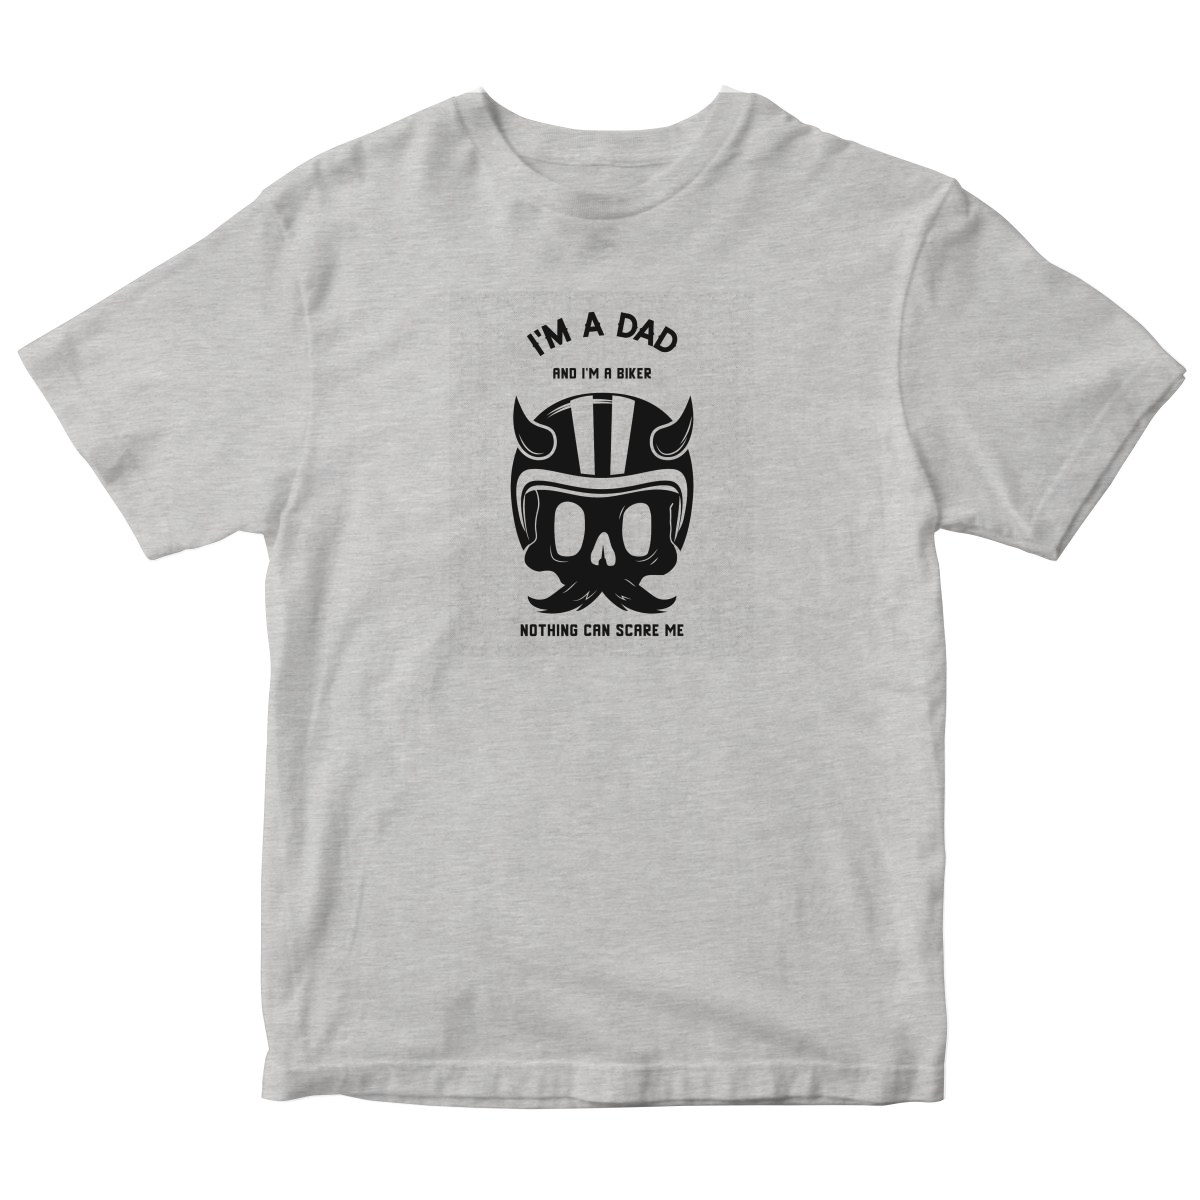 I'm a dad and a biker Kids T-shirt | Gray